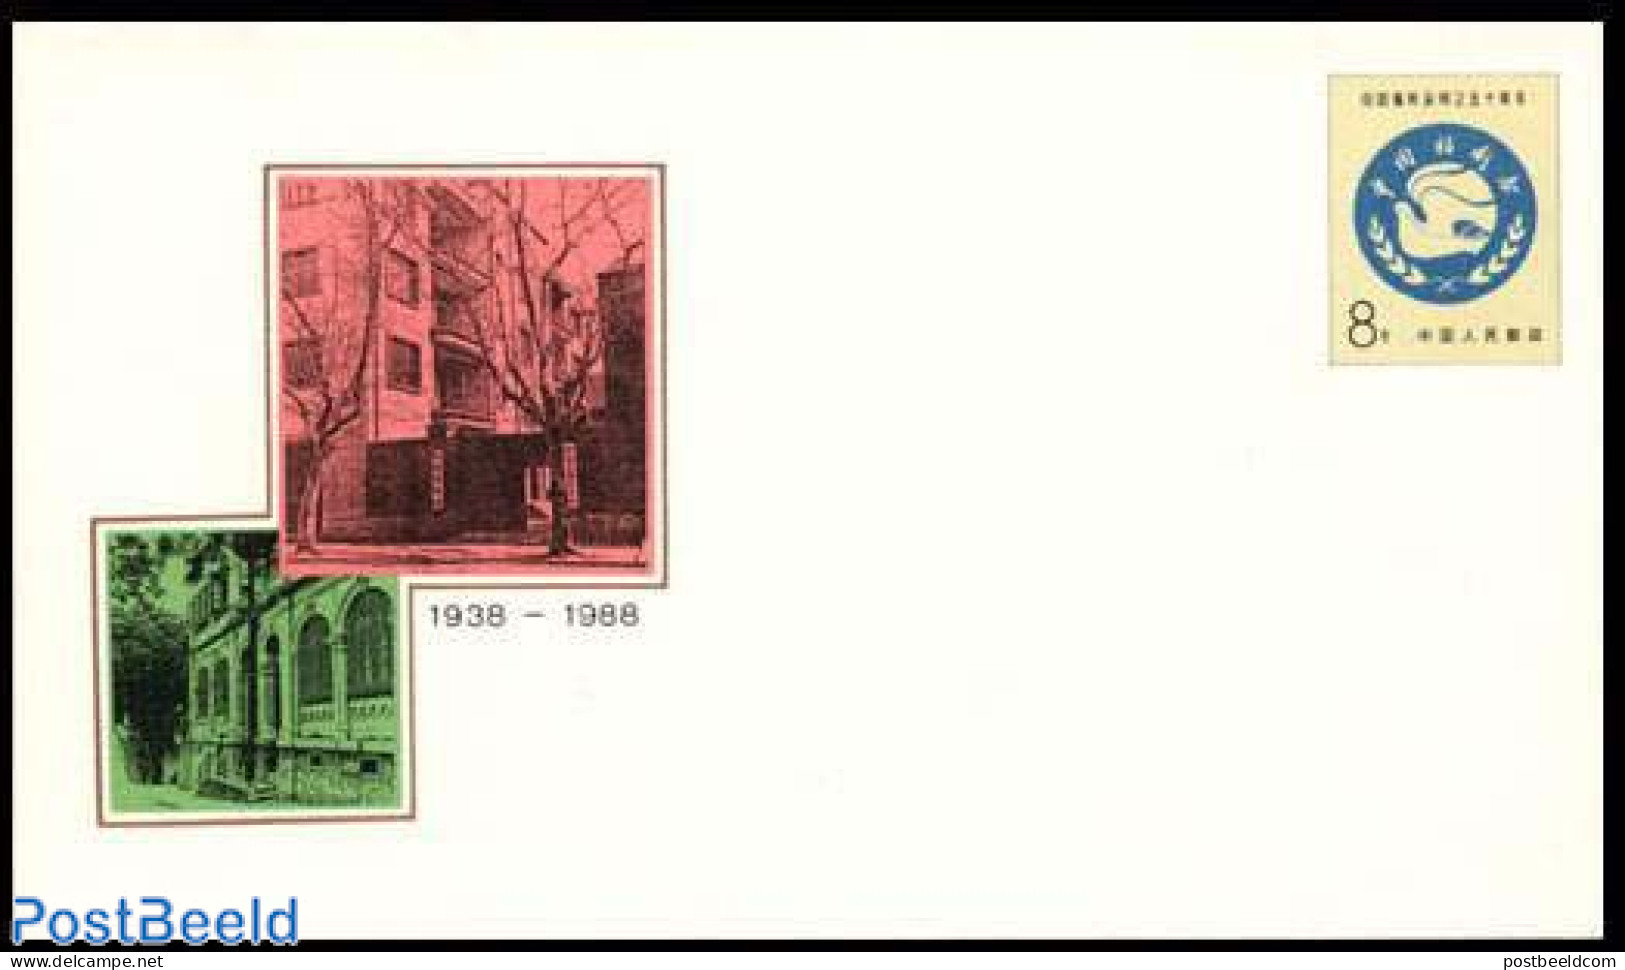 China People’s Republic 1988 Envelope, China Welfare Insitute, Unused Postal Stationary - Briefe U. Dokumente